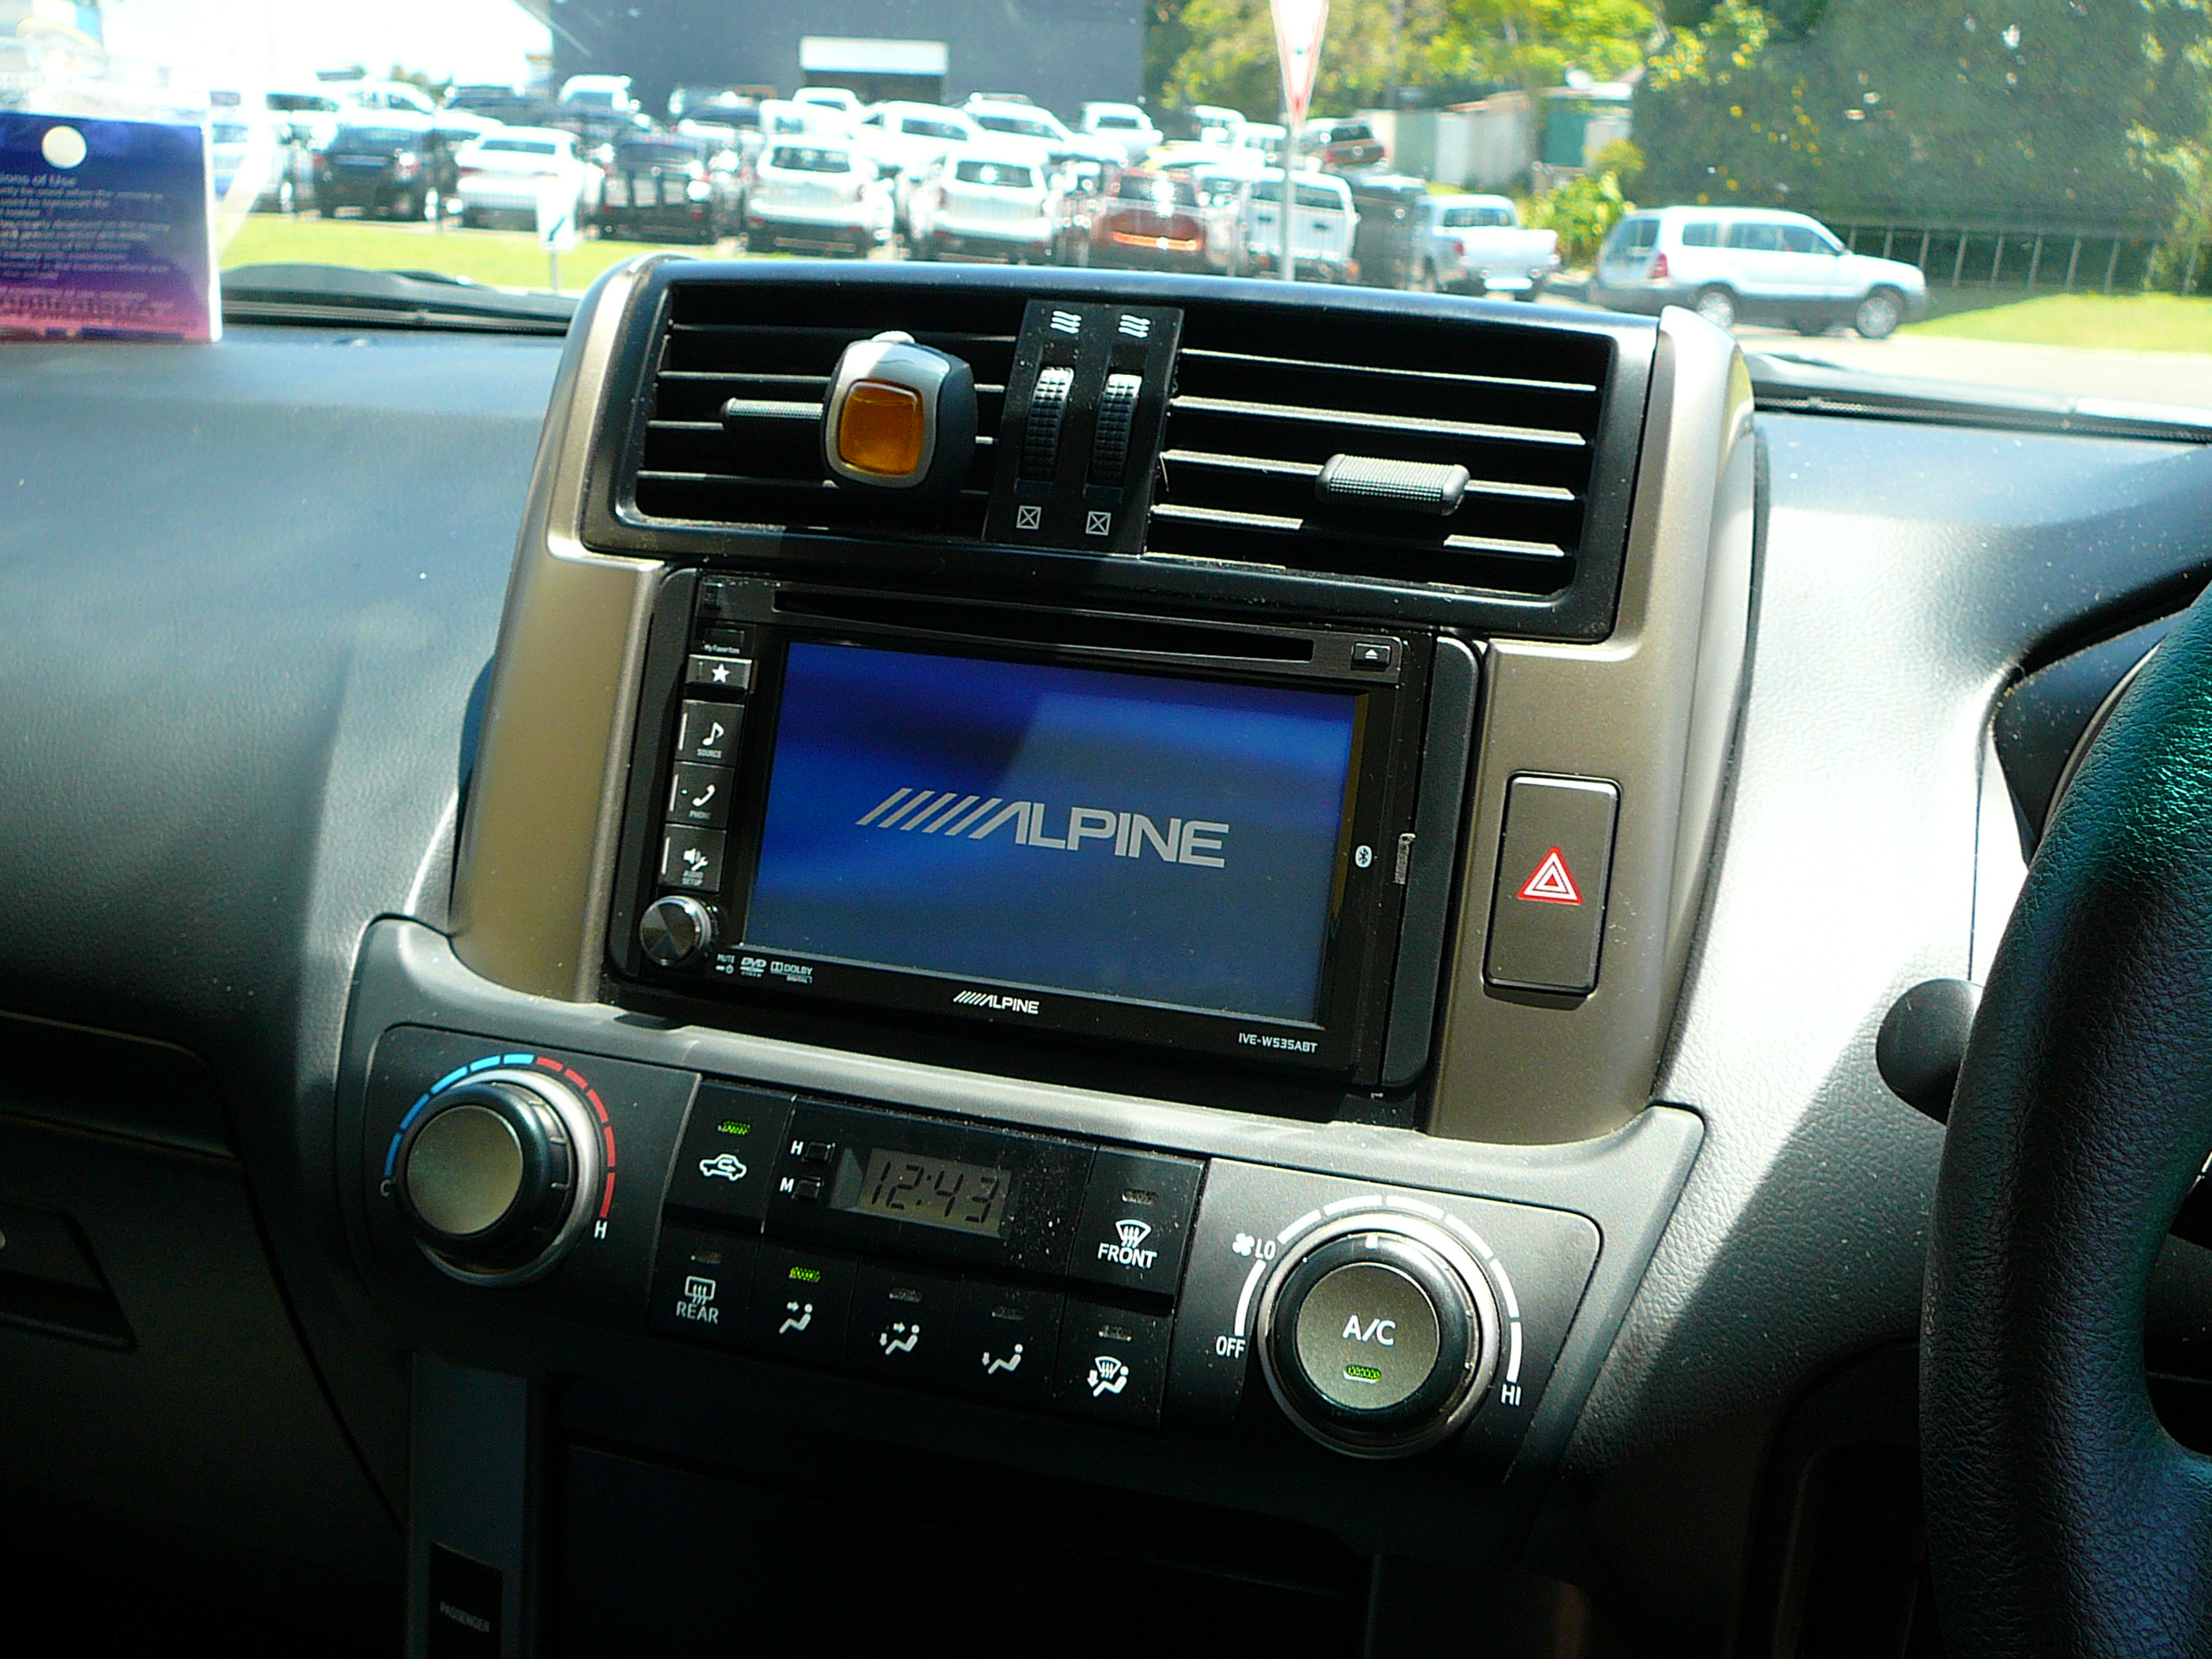 Toyota Prado 150series, Alpine IVE-W535ABT Audio Visual Unit & Dash Trim